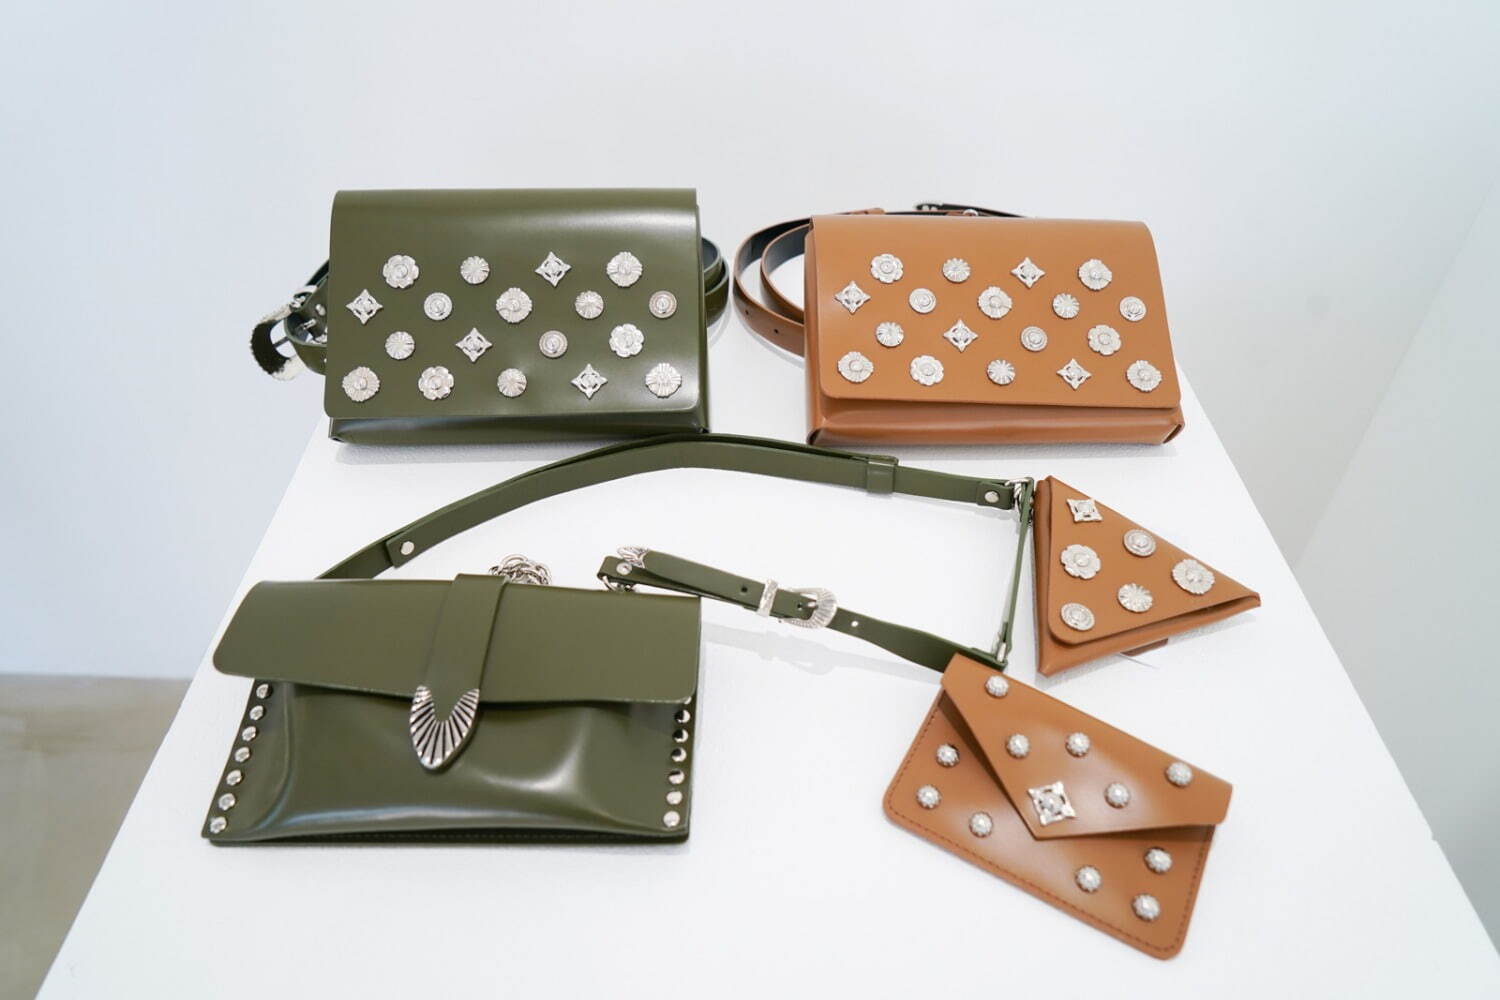 Motif metal belt bag 64,900円
Leather pouch triangle 14,300円
 Leather pouch square 15,400円
Leather chain bag 46,200円